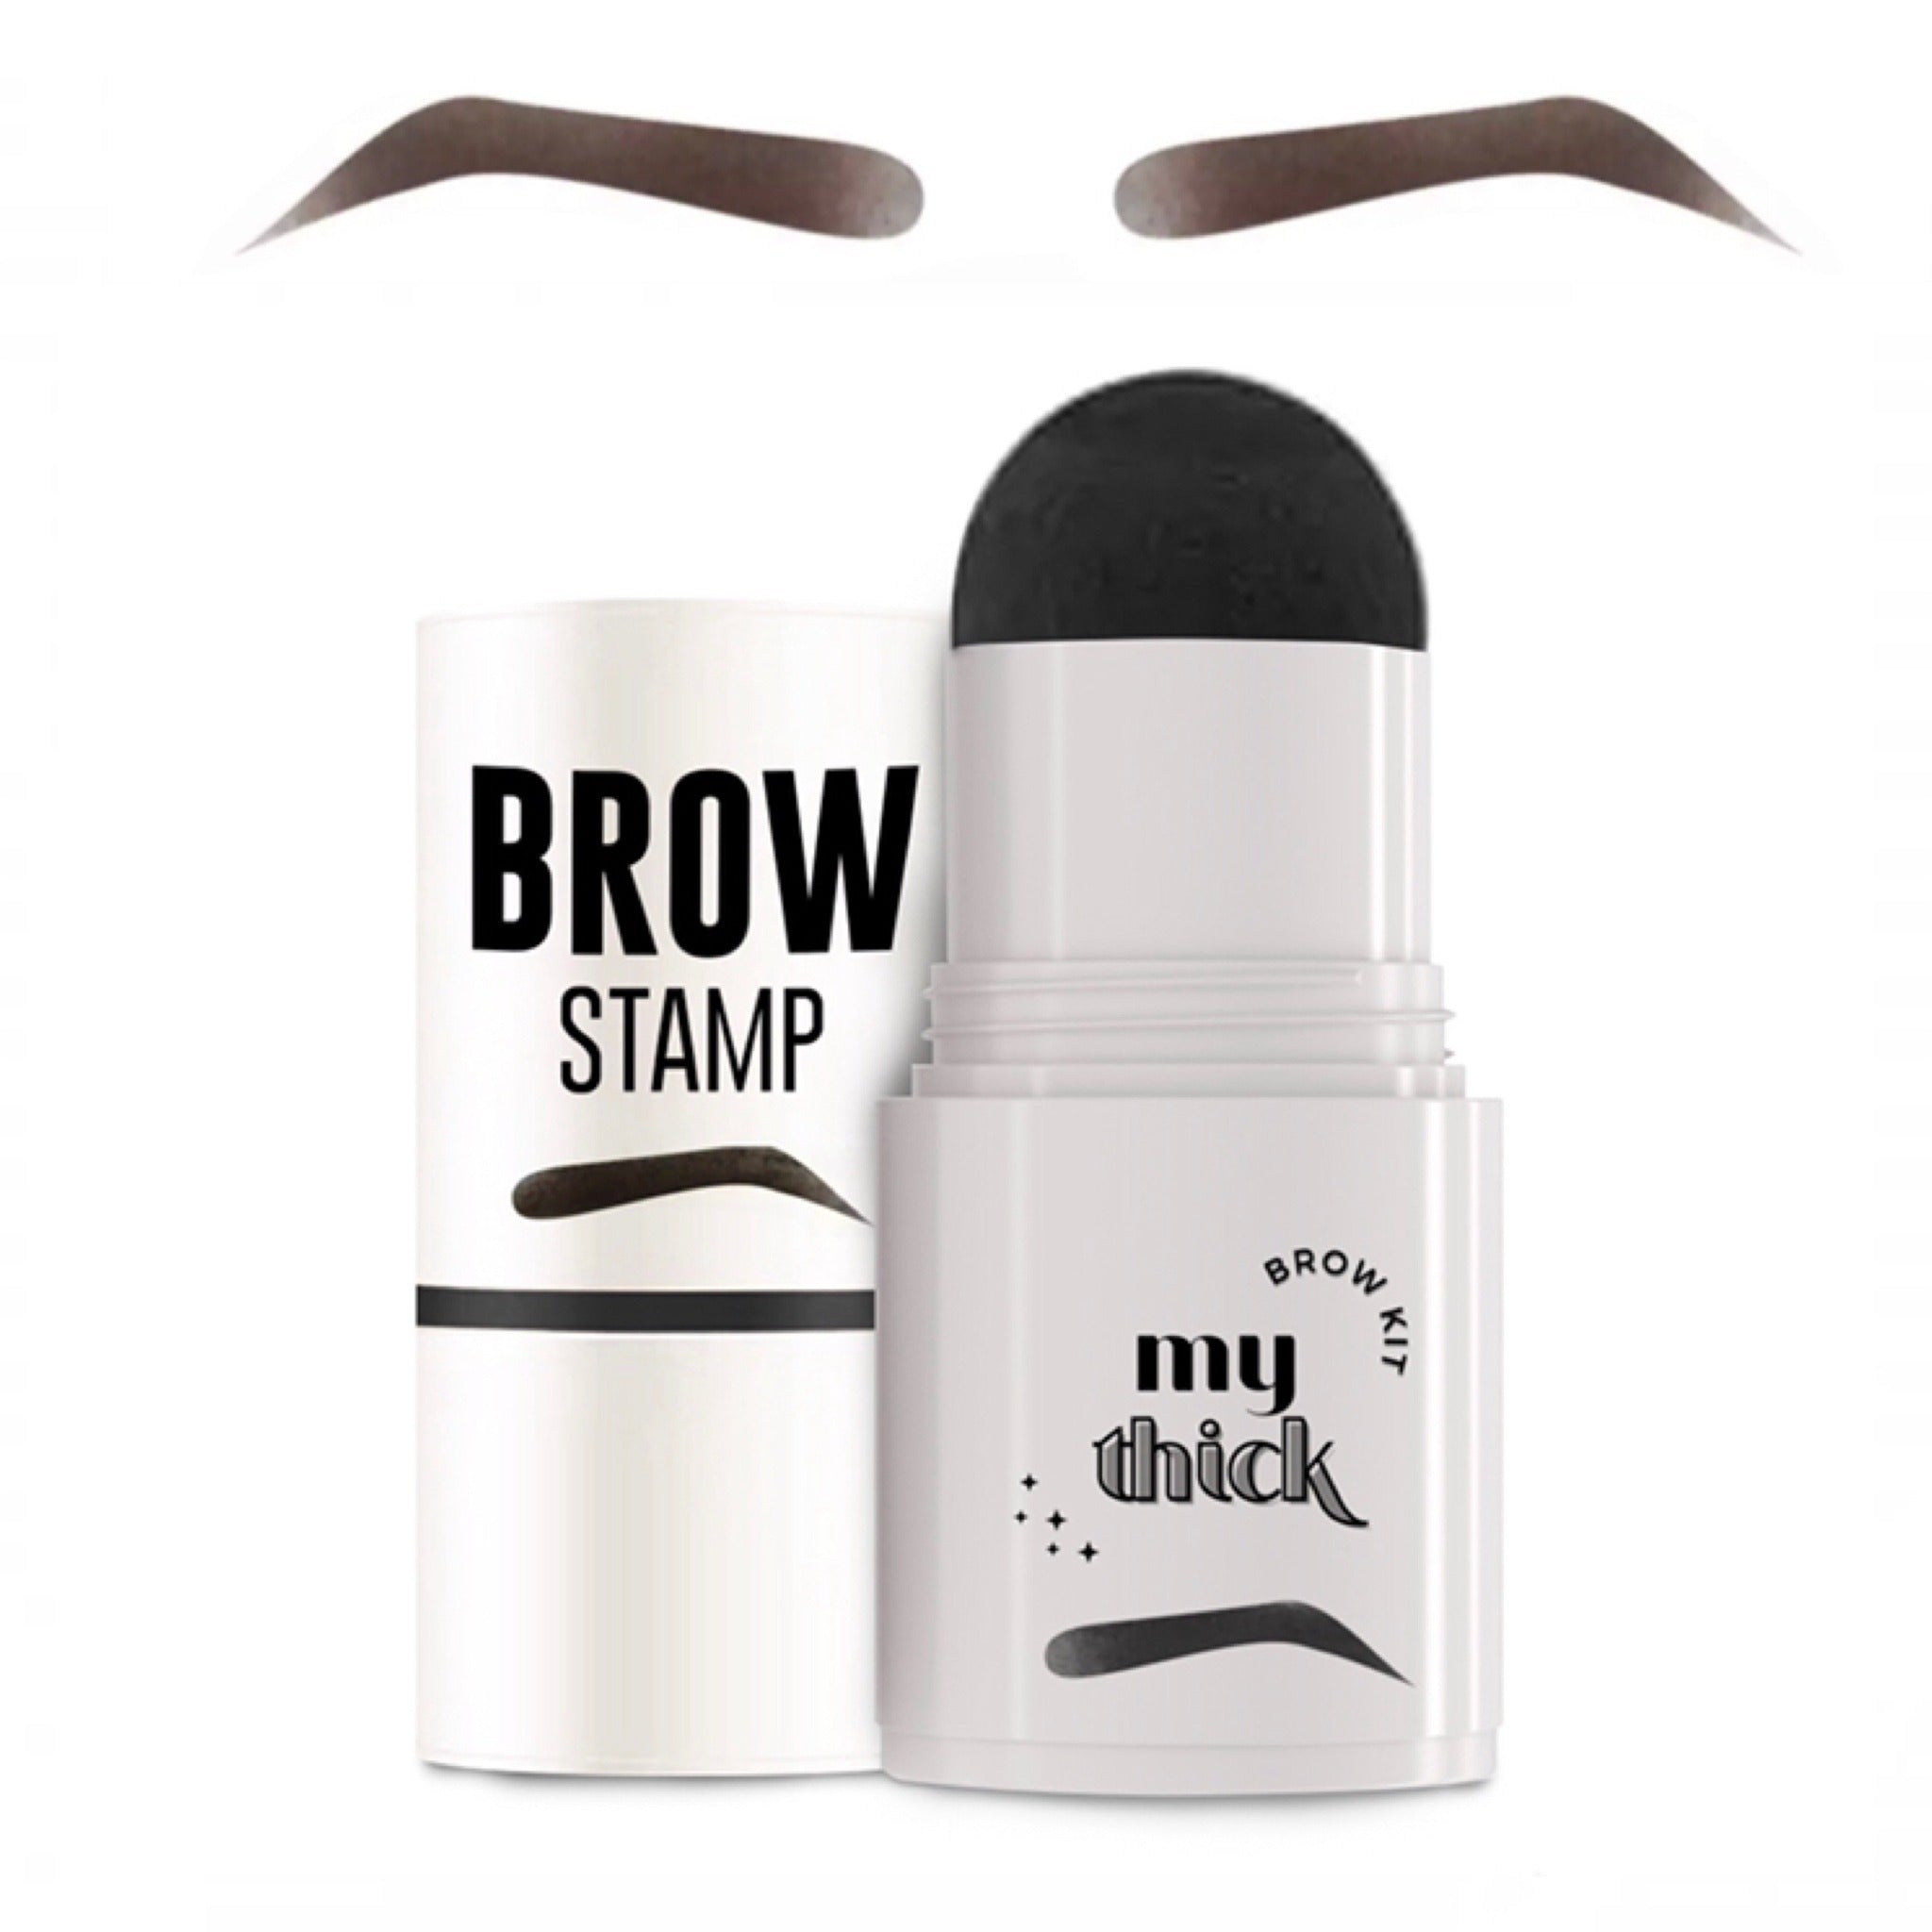 MYTHICKBROWKIT Eyebrow Stamp & Stencil Kit